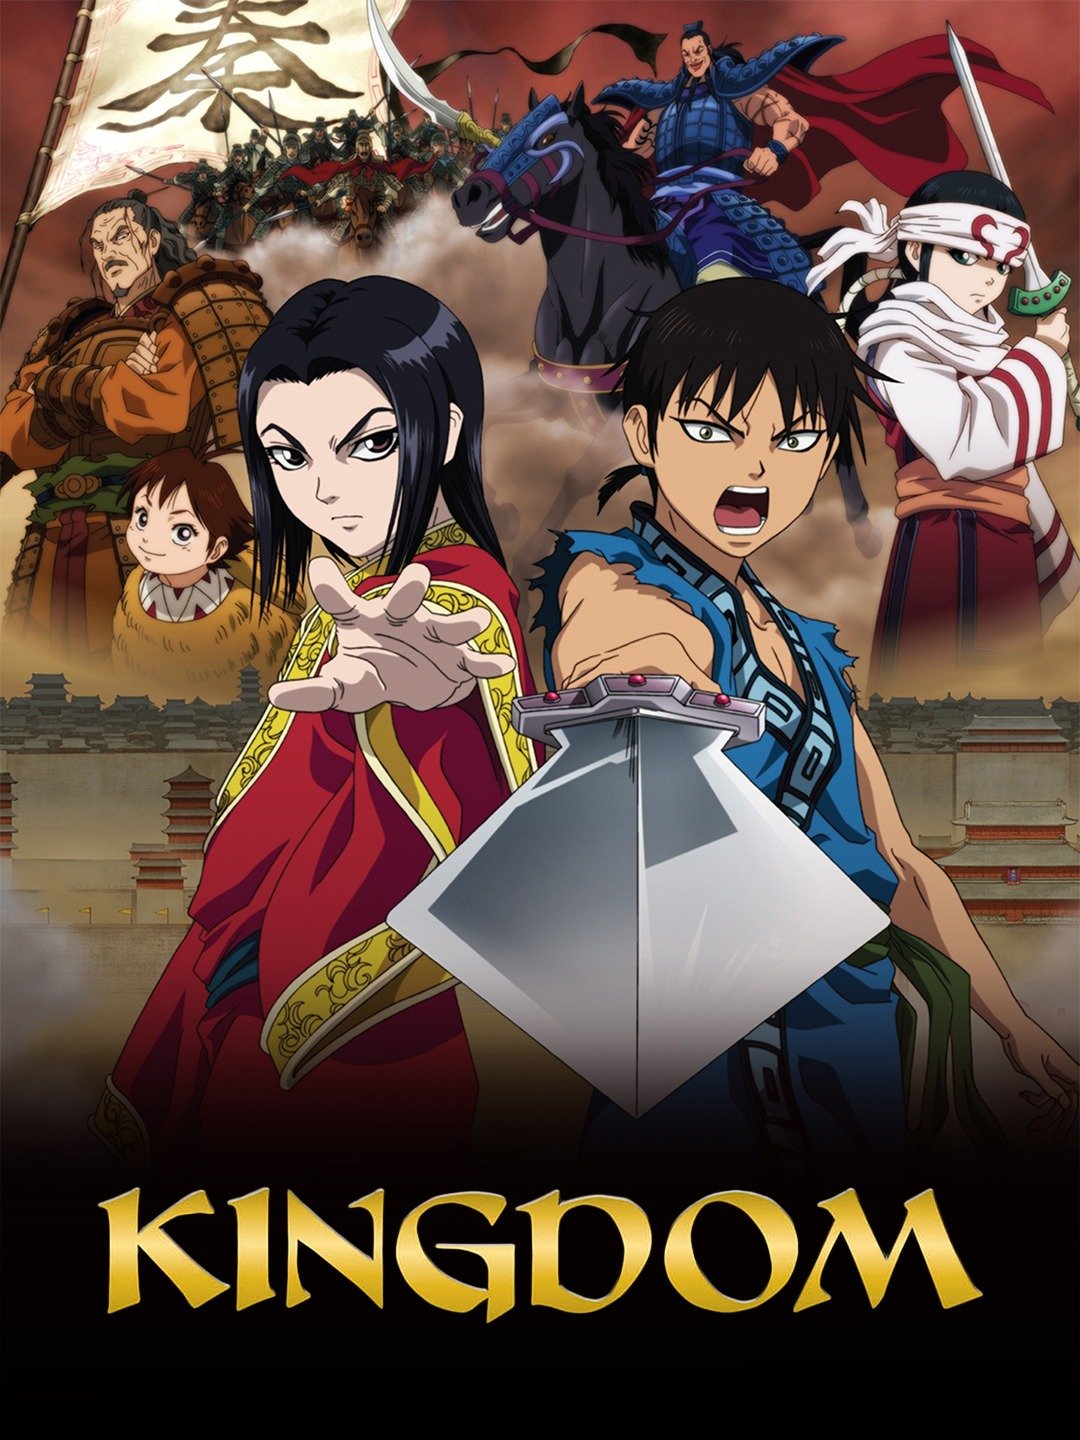 Kingdom Anime Gets 4th Season in Spring 2022! - Anime Ukiyo